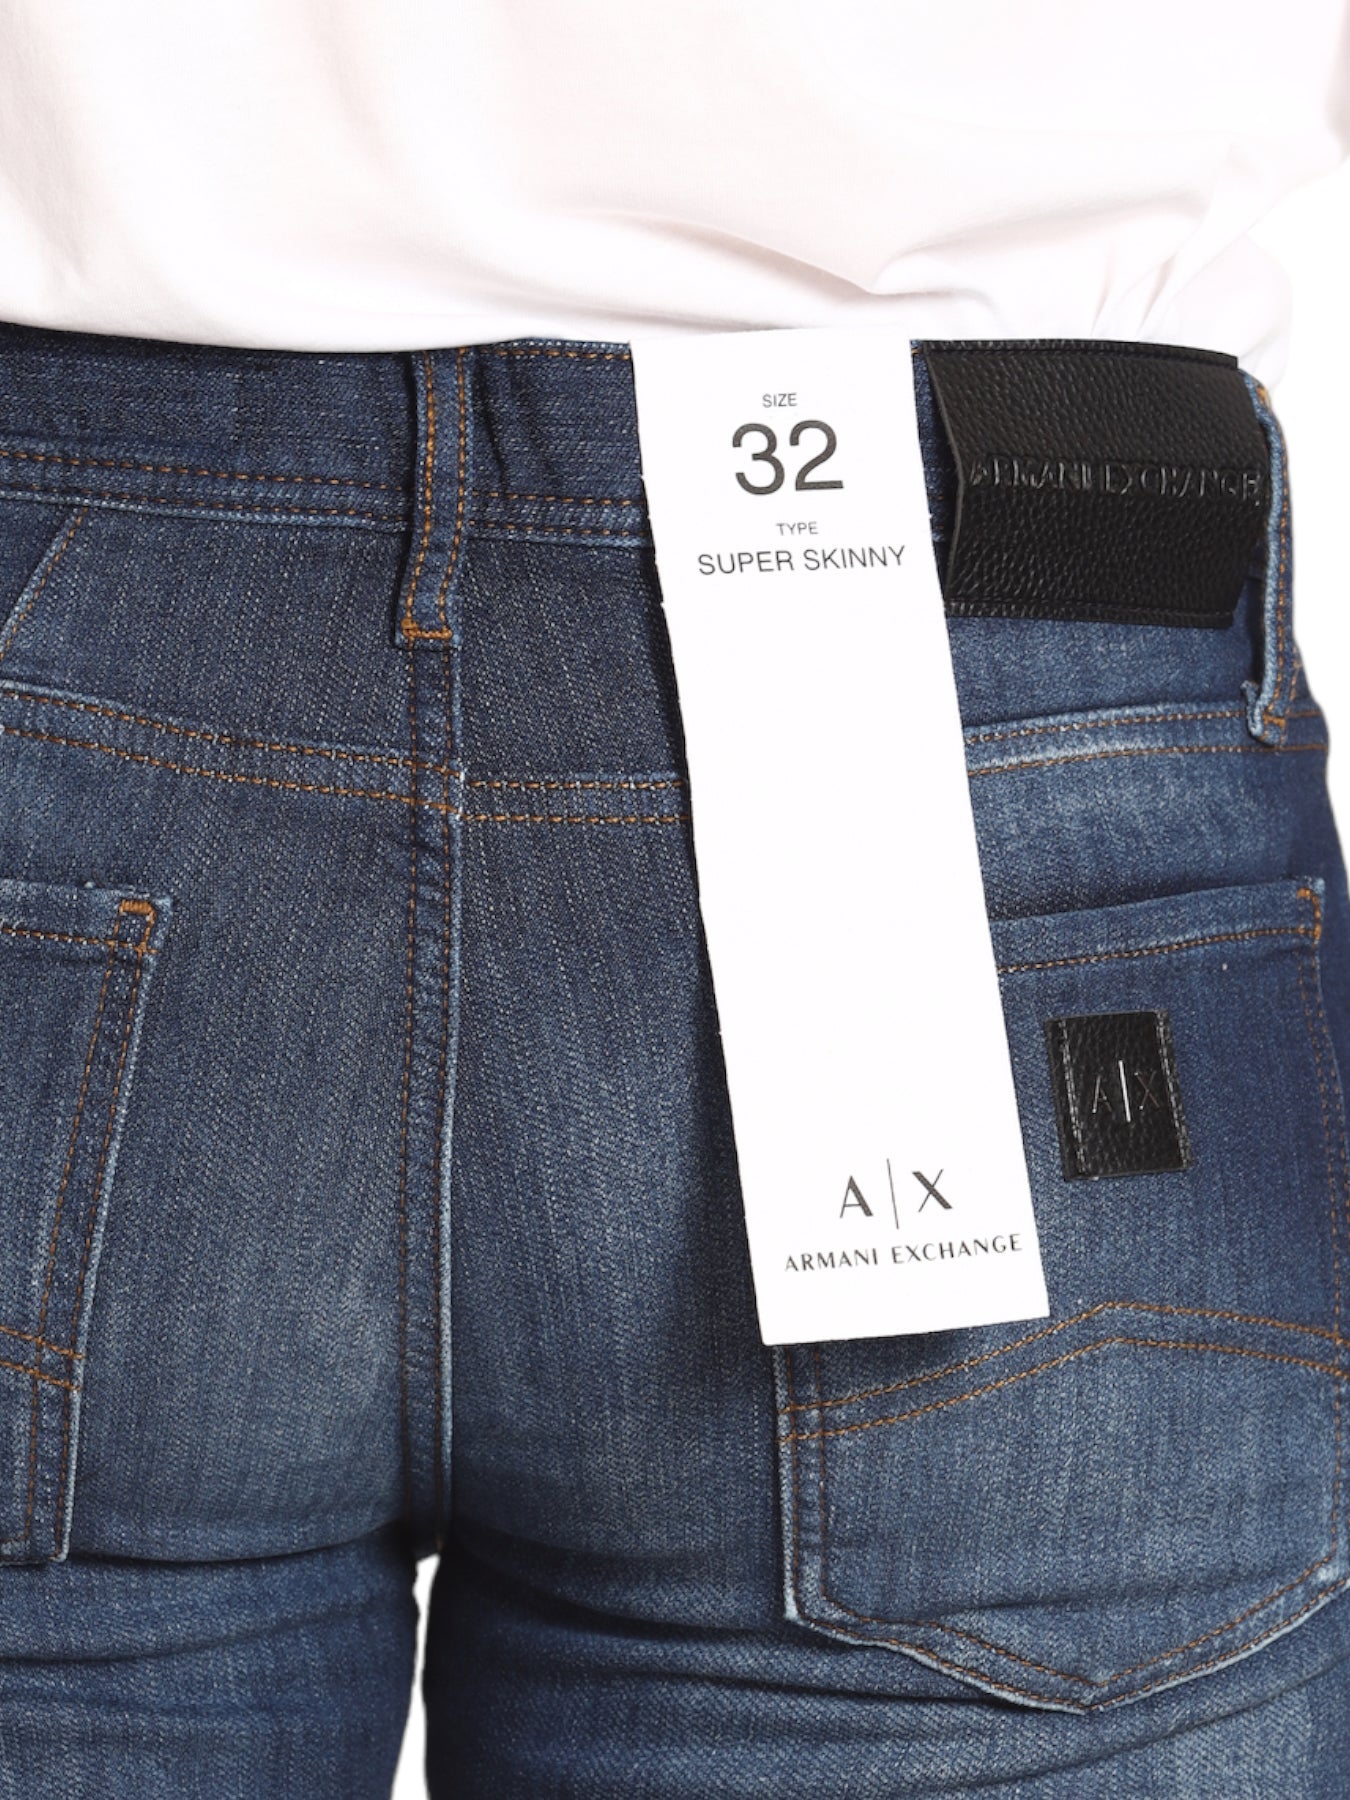 Armani Exchange Jeans 6rzj33 Indigo Denim Dark